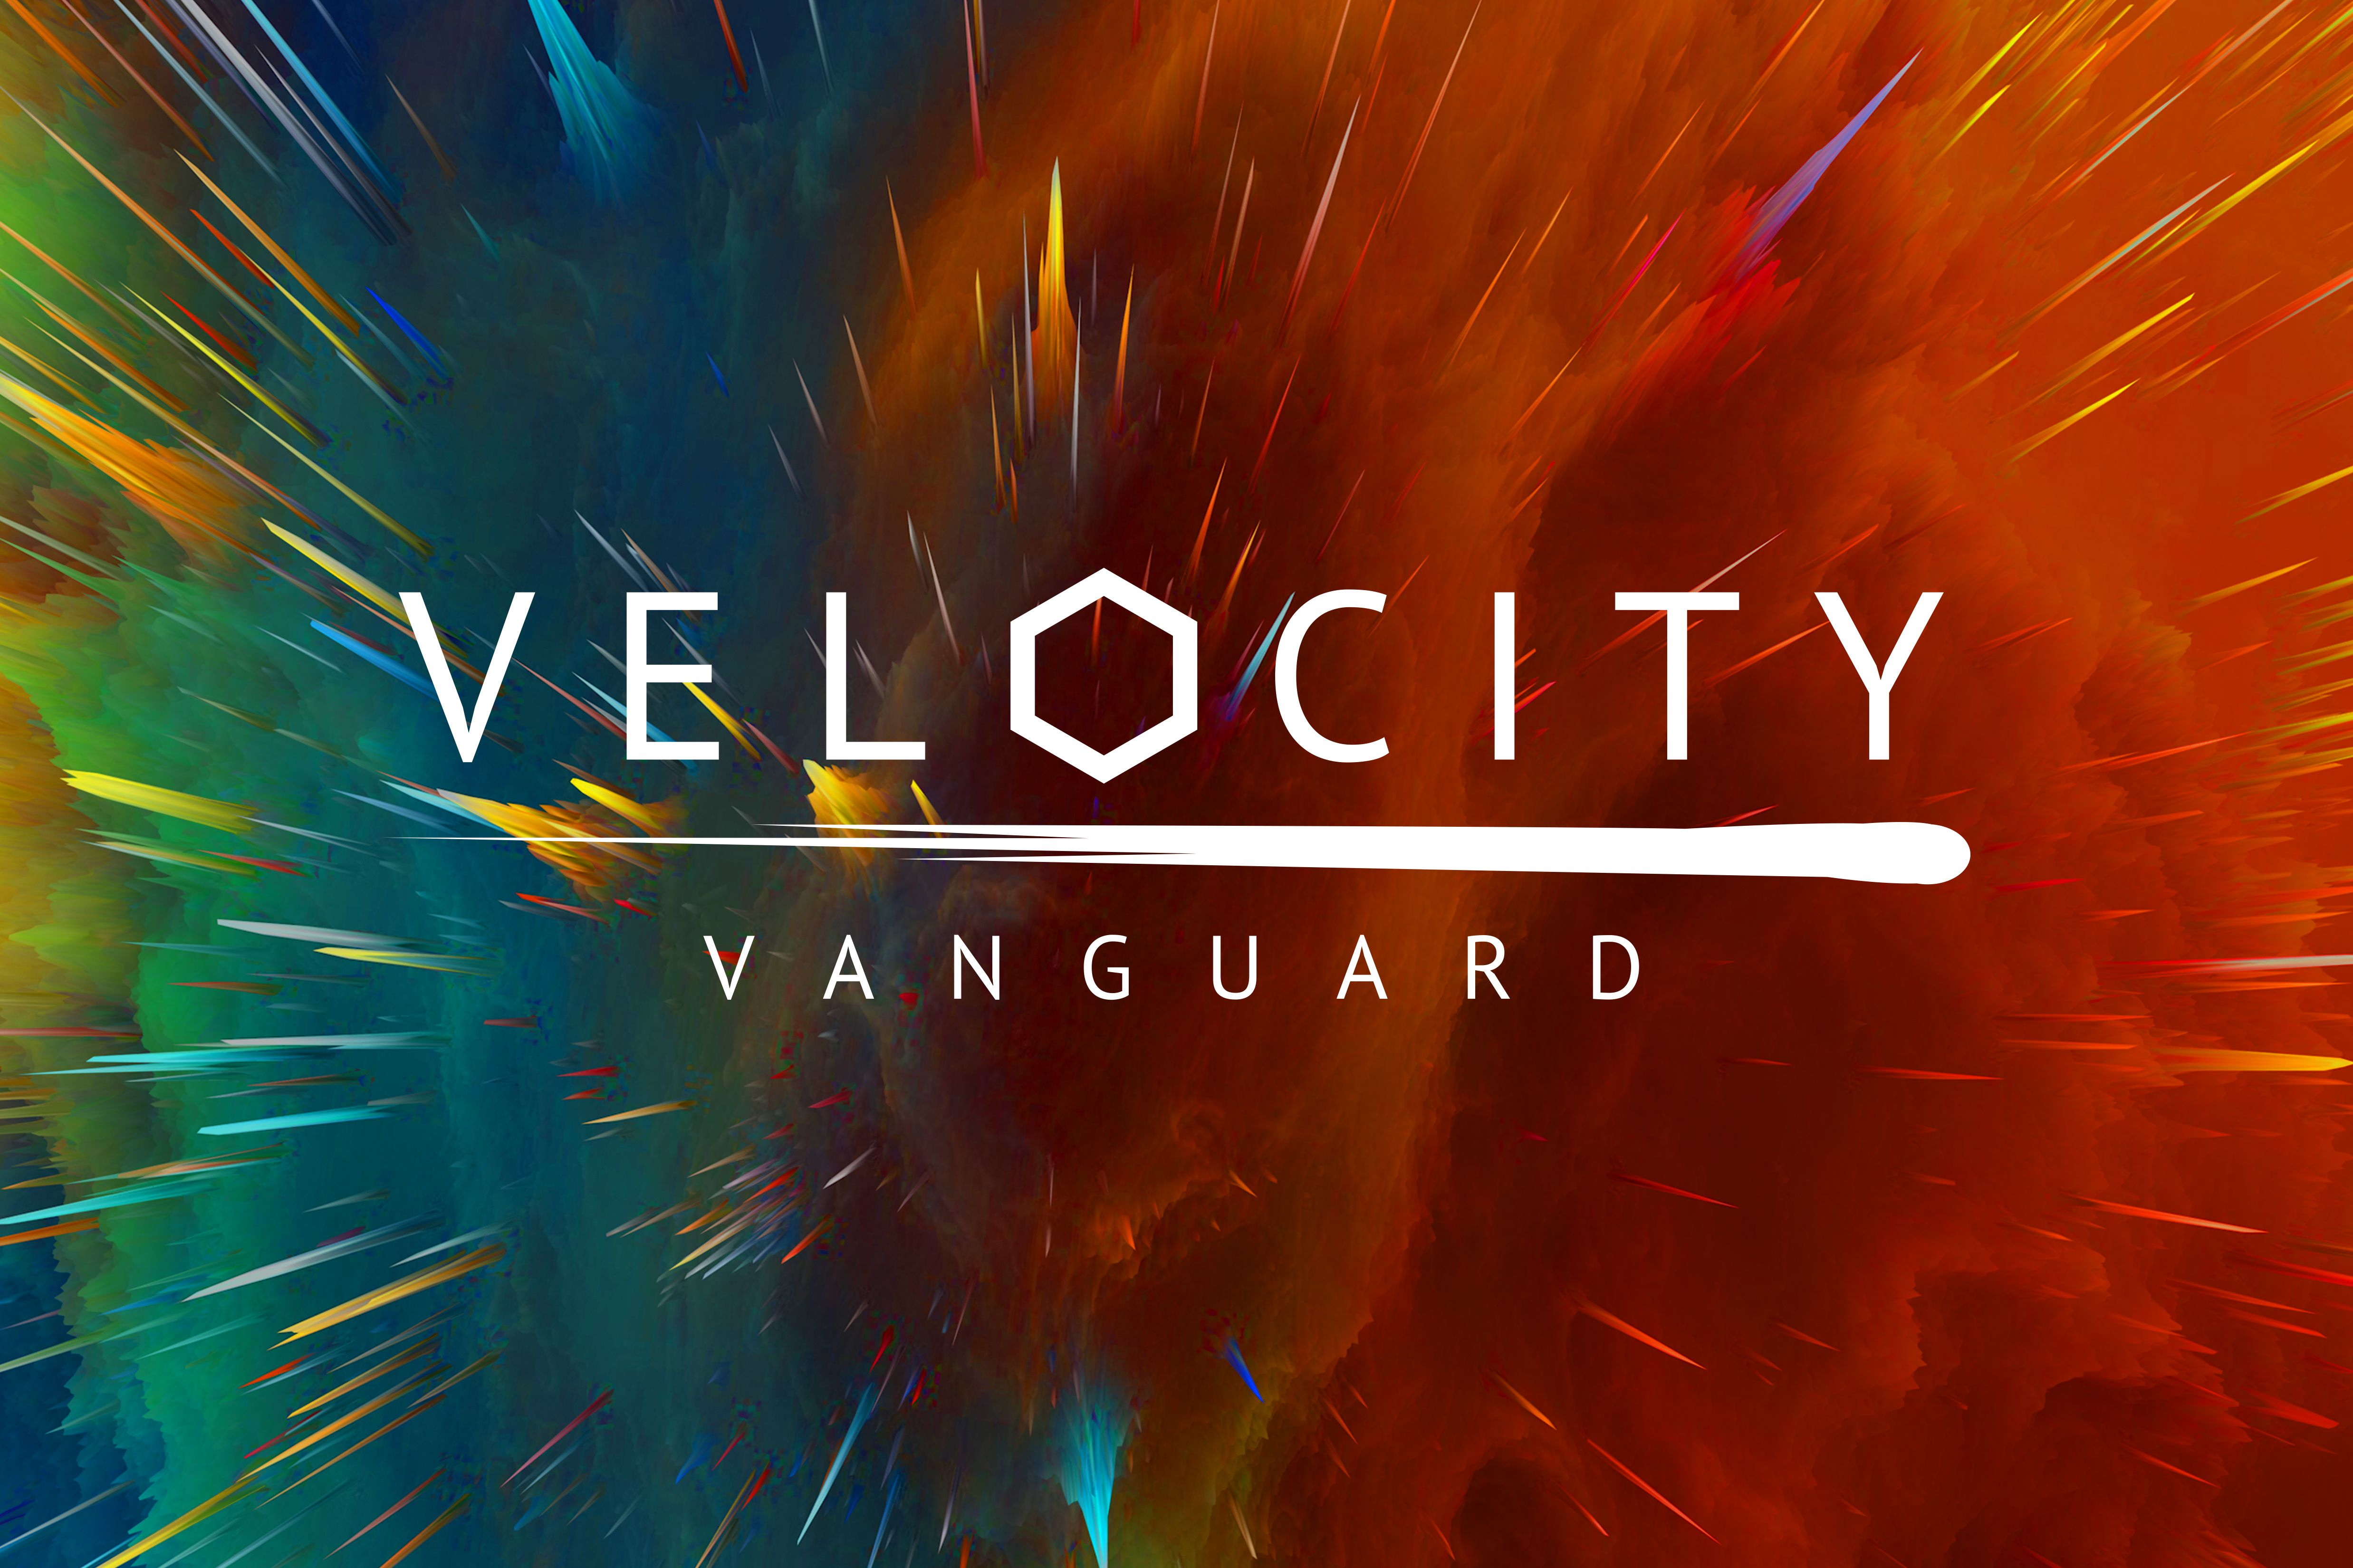 Velocity: Vanguard